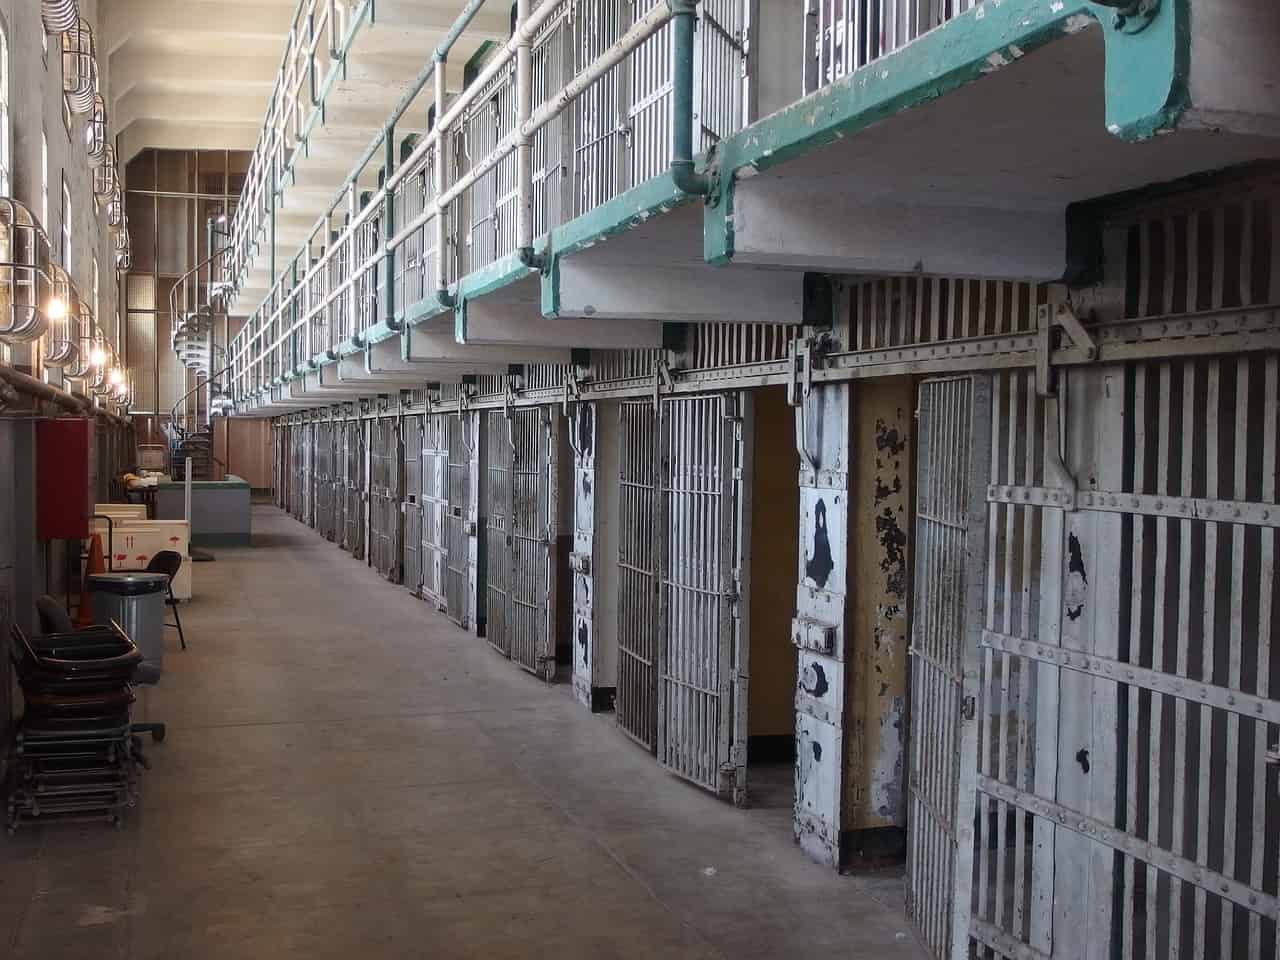 A row of jail cells in Alcatraz. Image source: Pixabay user Marcello Rabozzi.